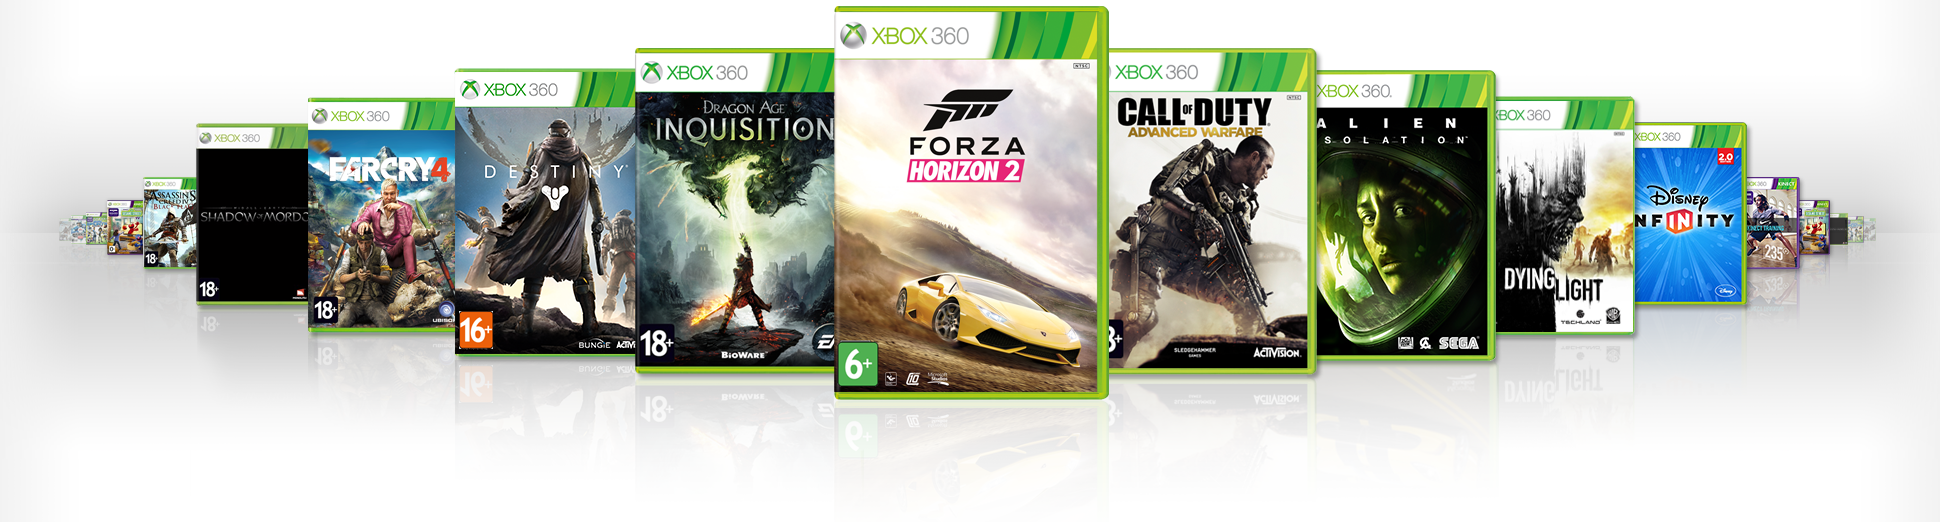 Microsoft Xbox 360 + Forza Horizon 2, Halo Reach купить